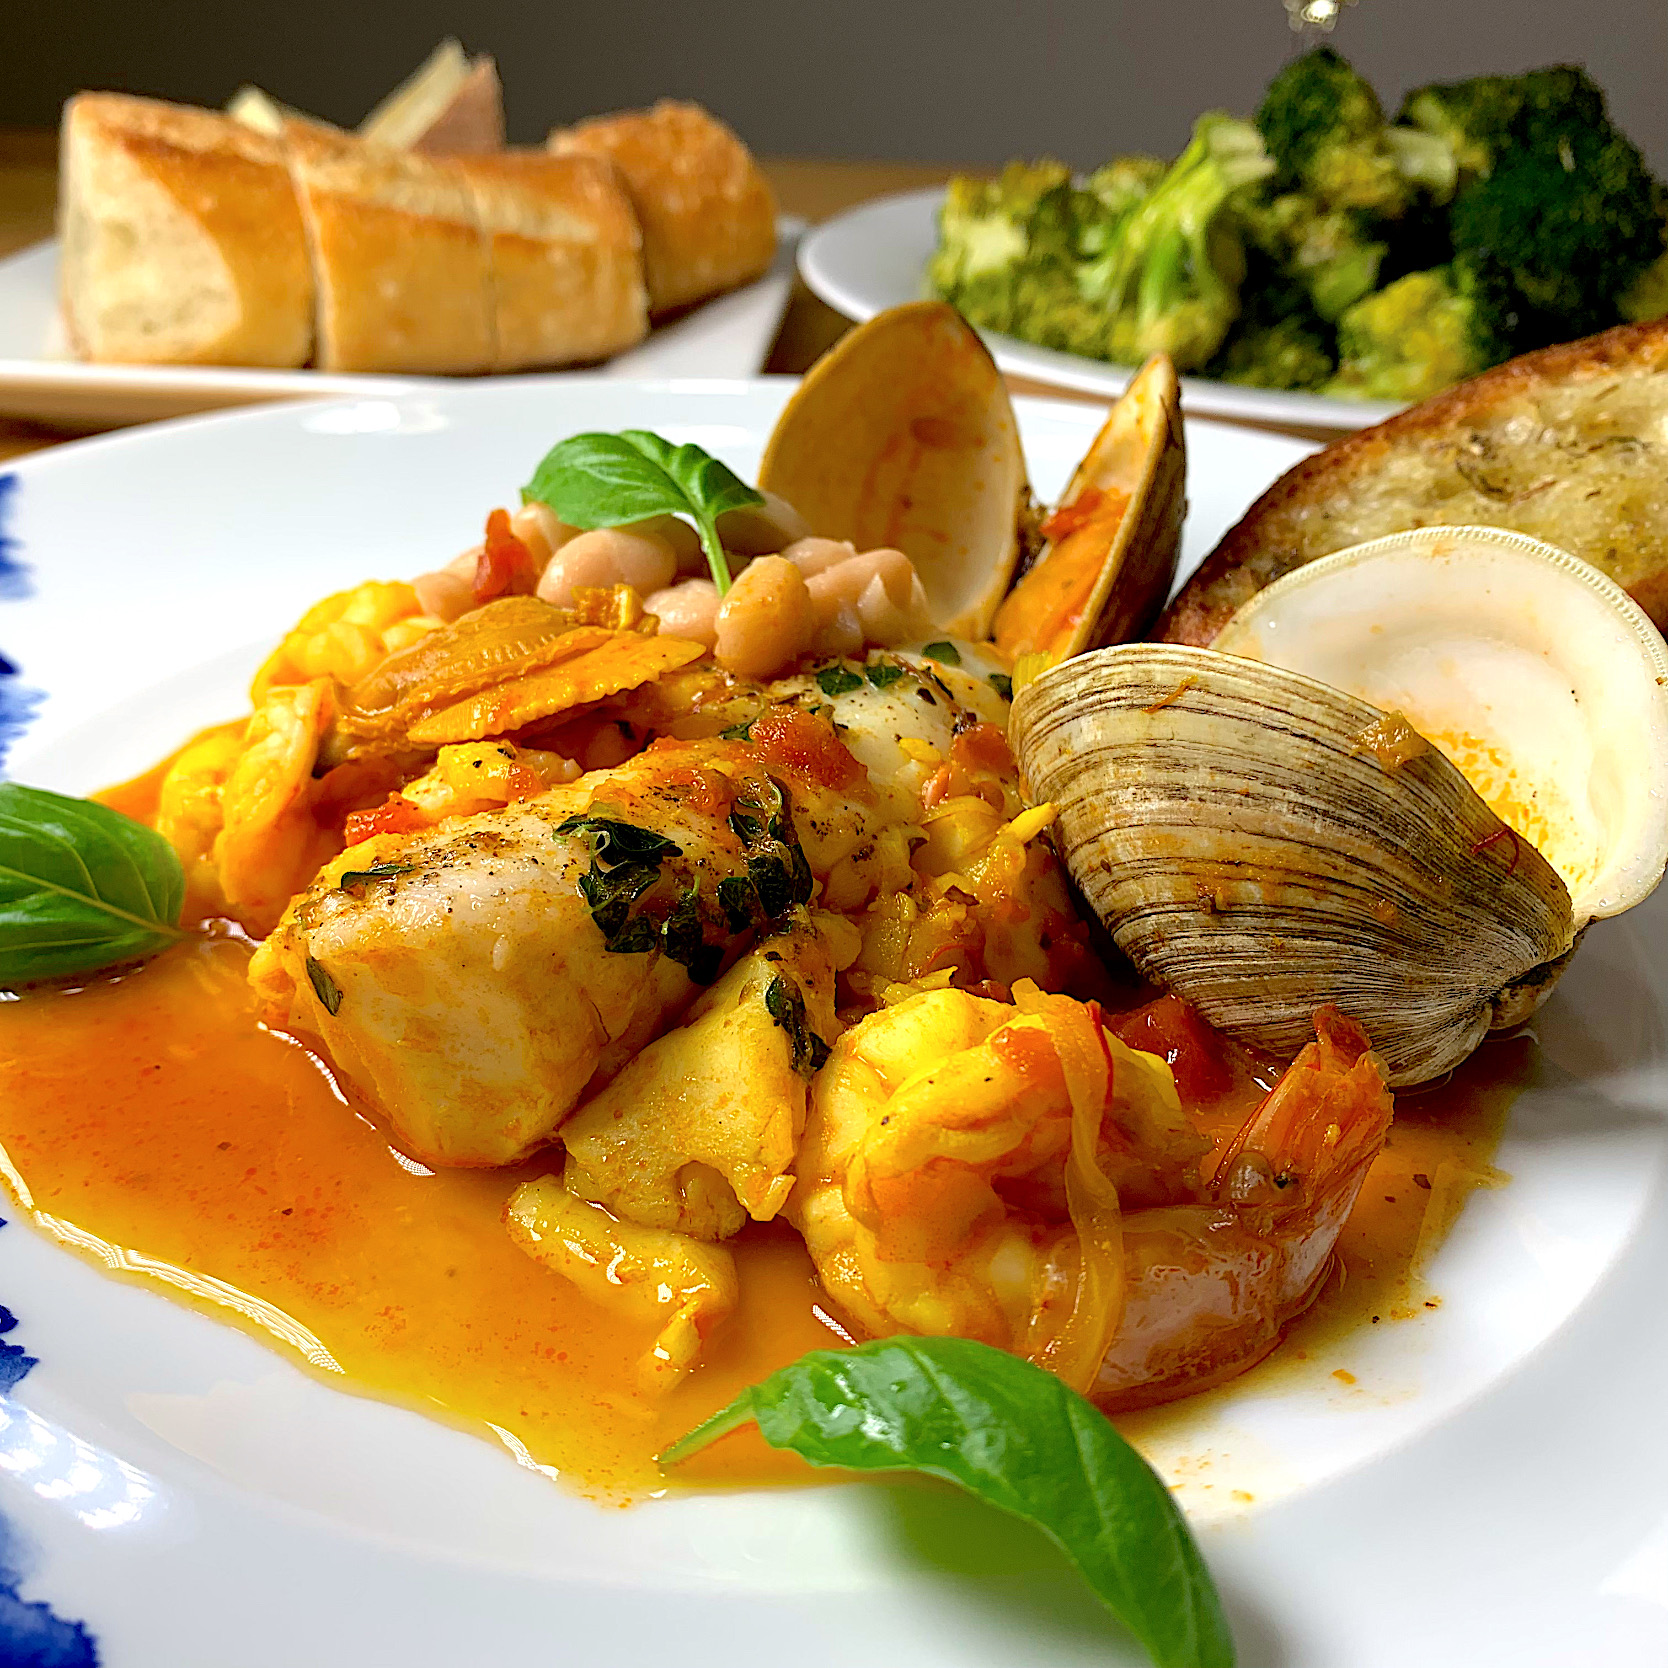 Seafood Stew with Cod, Shrimp and Clams (鱈、海老、蛤のブイヤベース風)